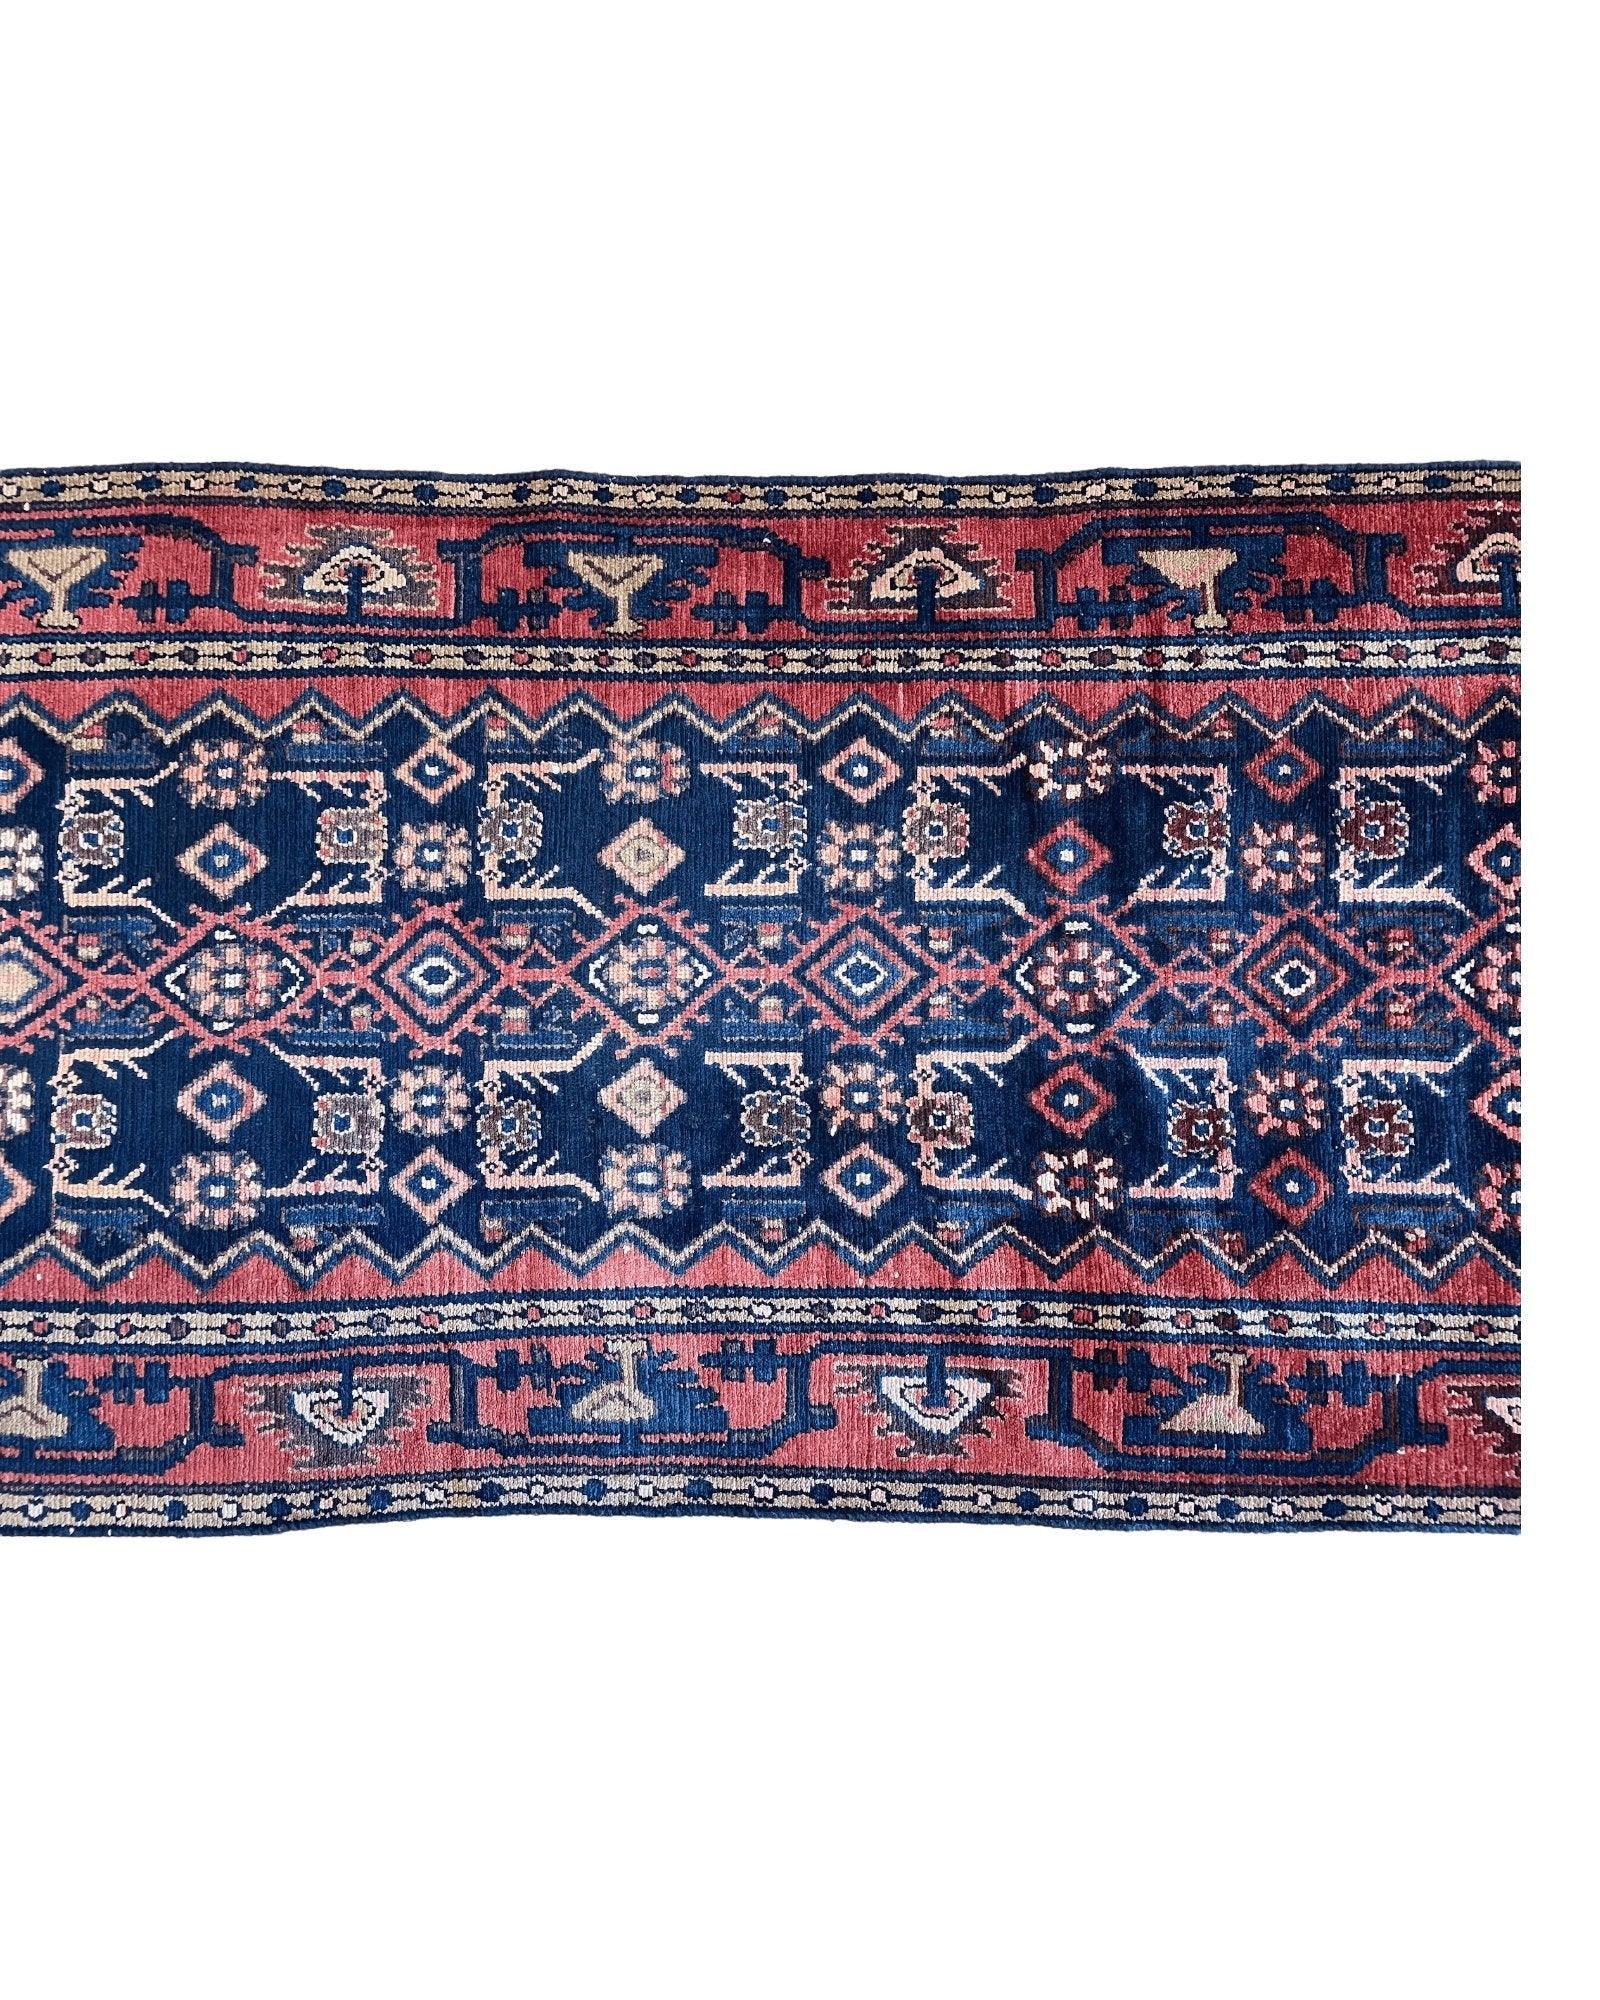 Antique Vegetable Dye Malayer Persian Runner Rug 3x10’4”